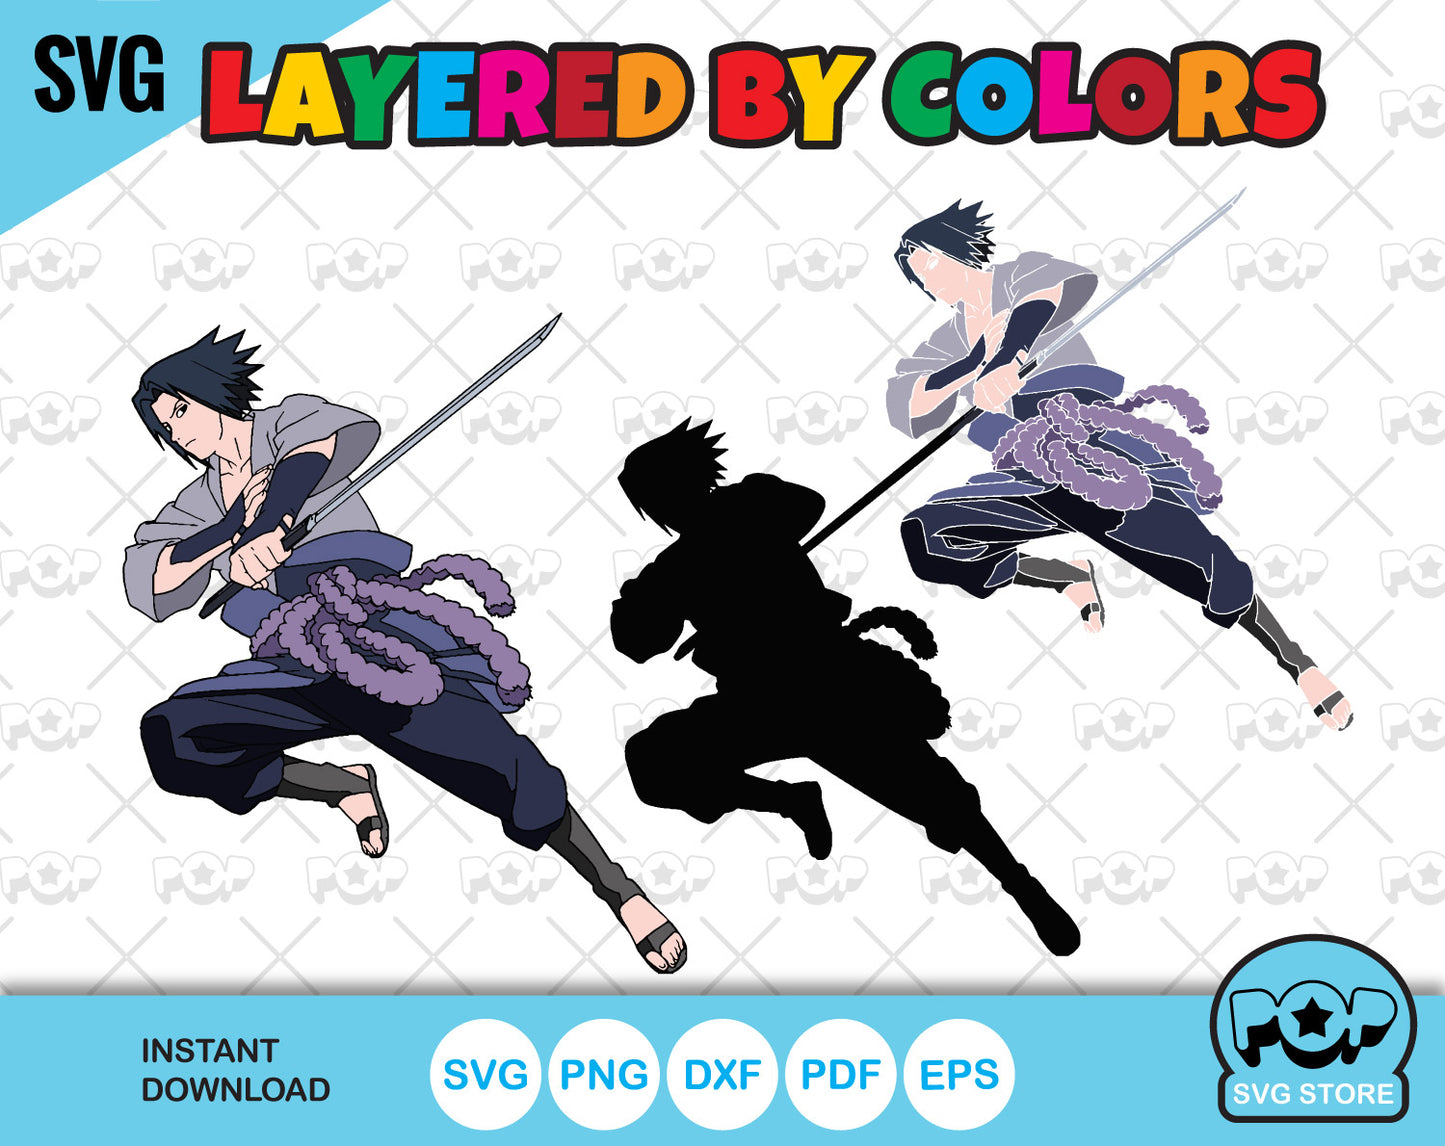 Naruto Cliparts - Sasuke Uchiha Clipart Set, Sasuke SVG cut files for Cricut / Silhouette, SVG, PNG, DXF, instant download